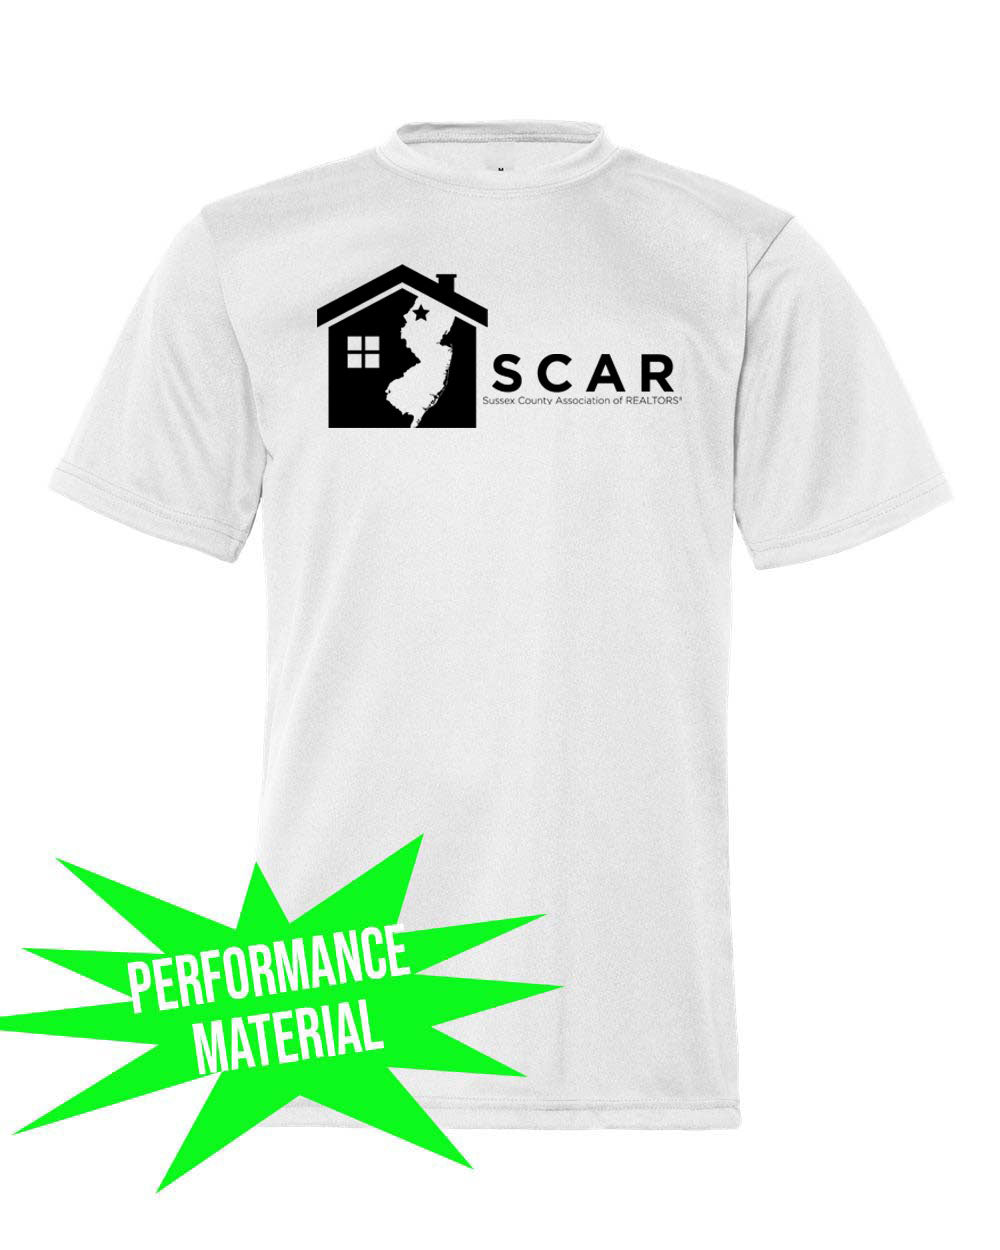 SCAR Performance material design 2 T-Shirt